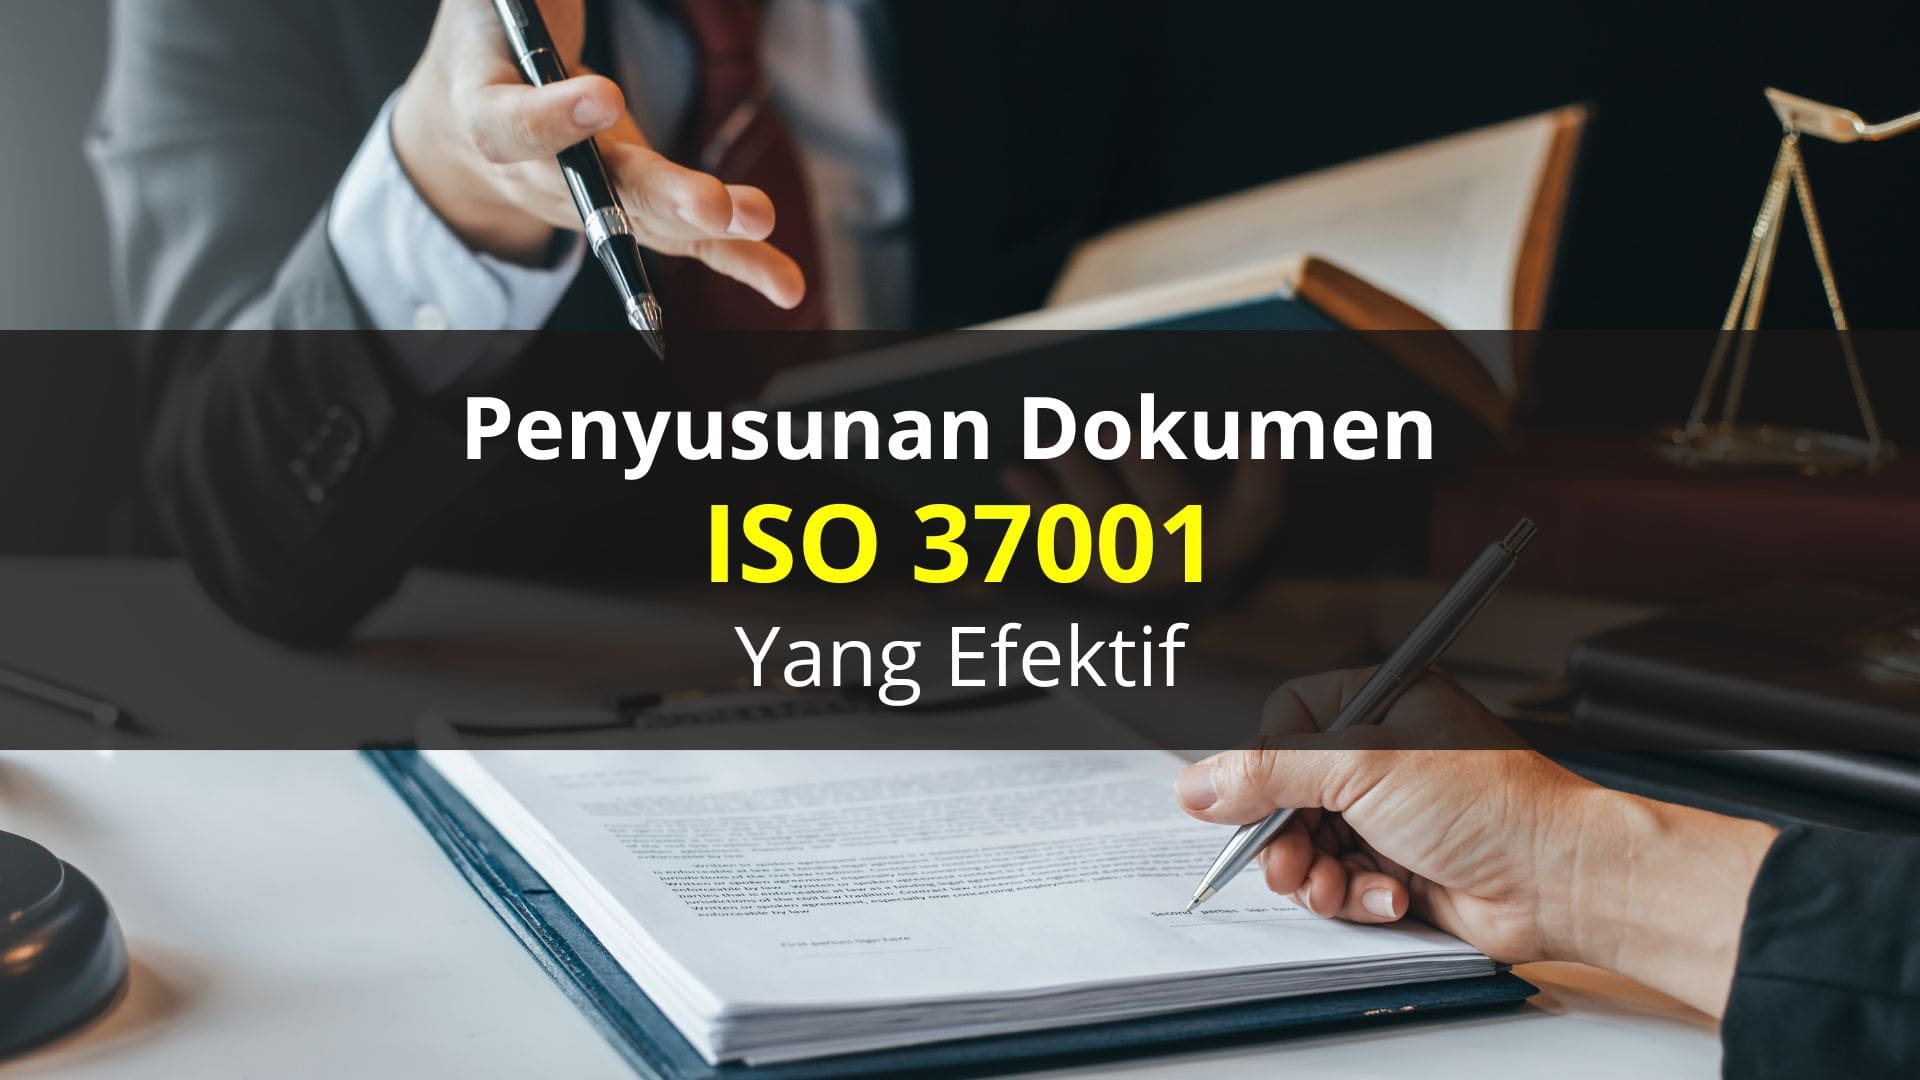 Penyusunan Dokumen ISO 37001 yang Efektif